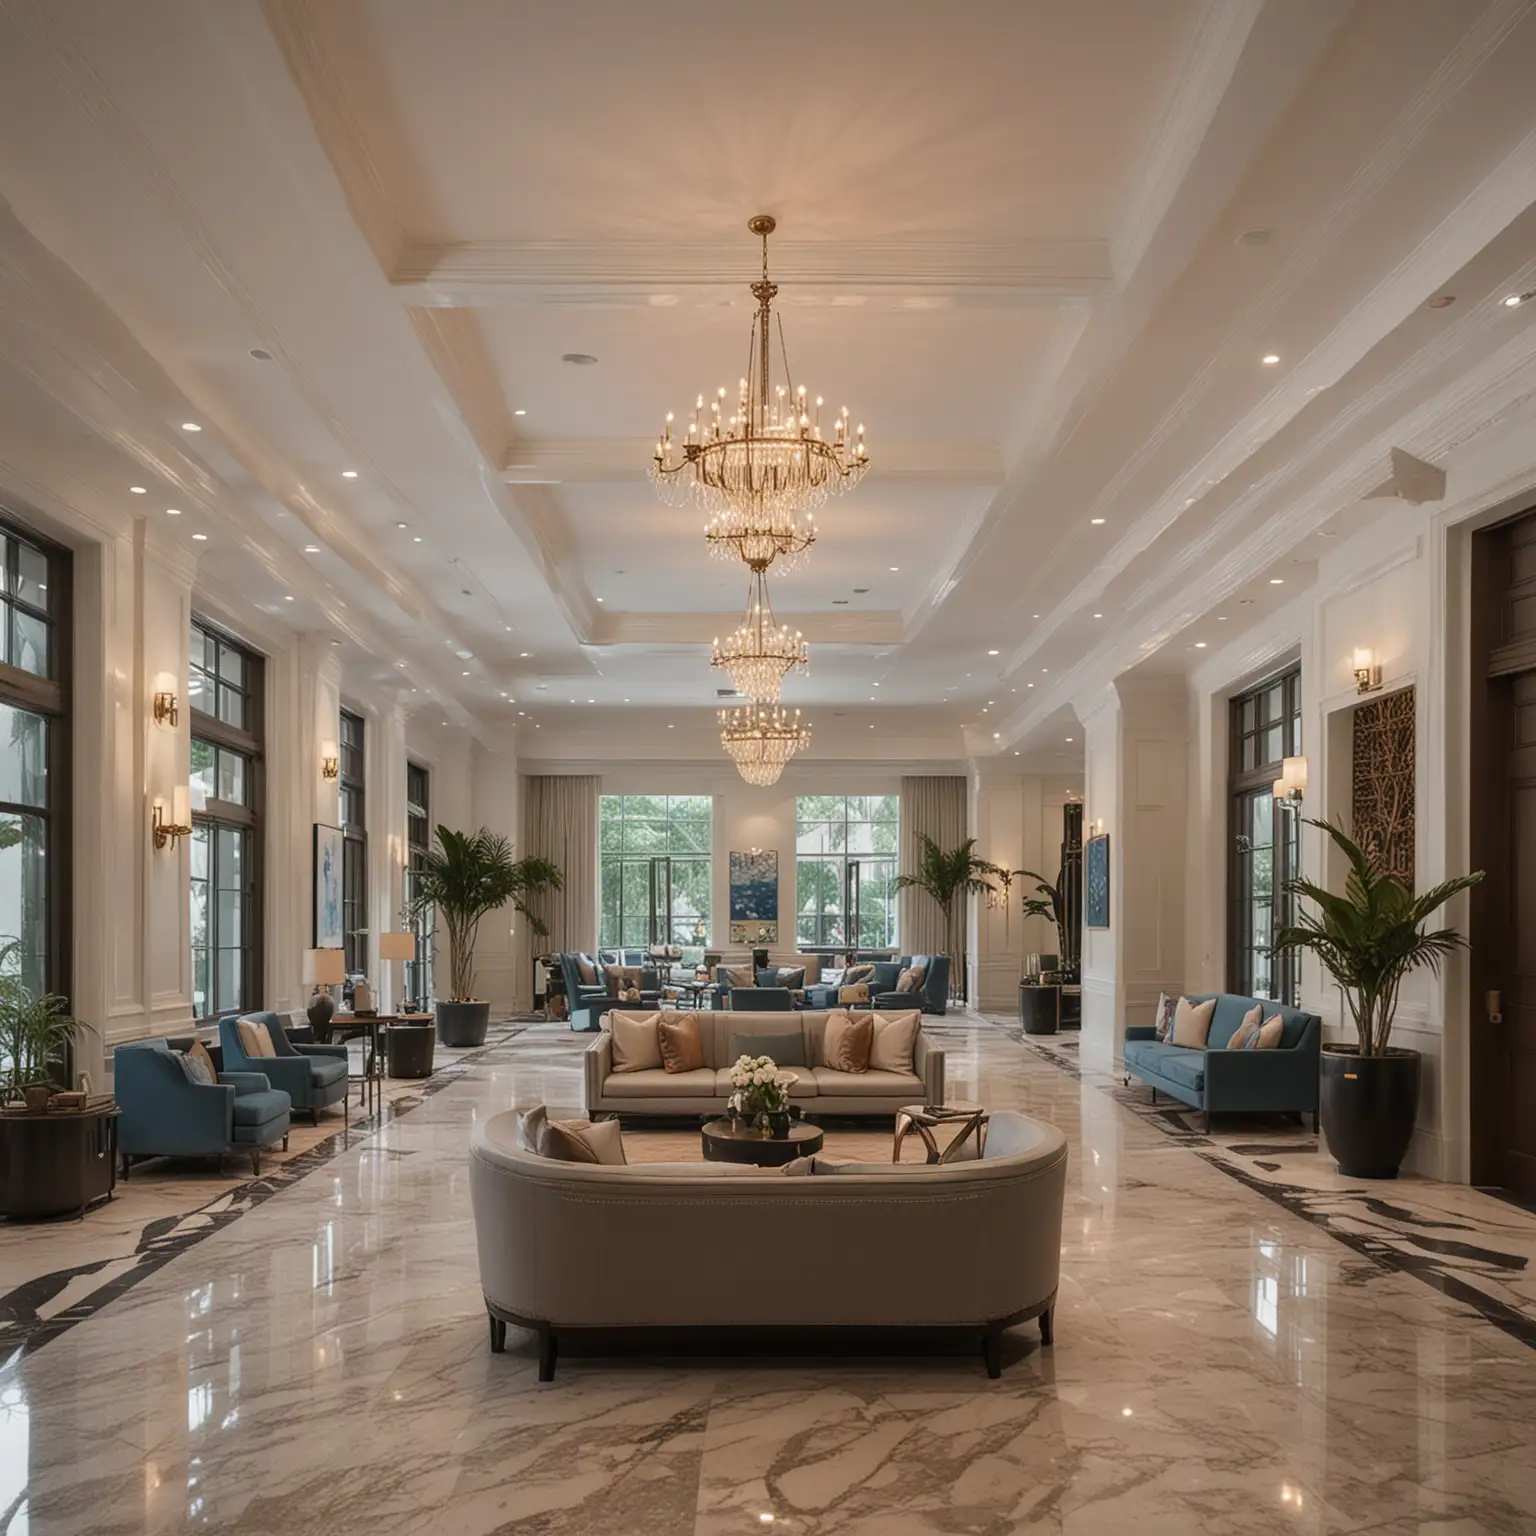 Luxurious Modern Coastal Colonial Grand Hotel Lobby Inspired by Hard Rock Hotel